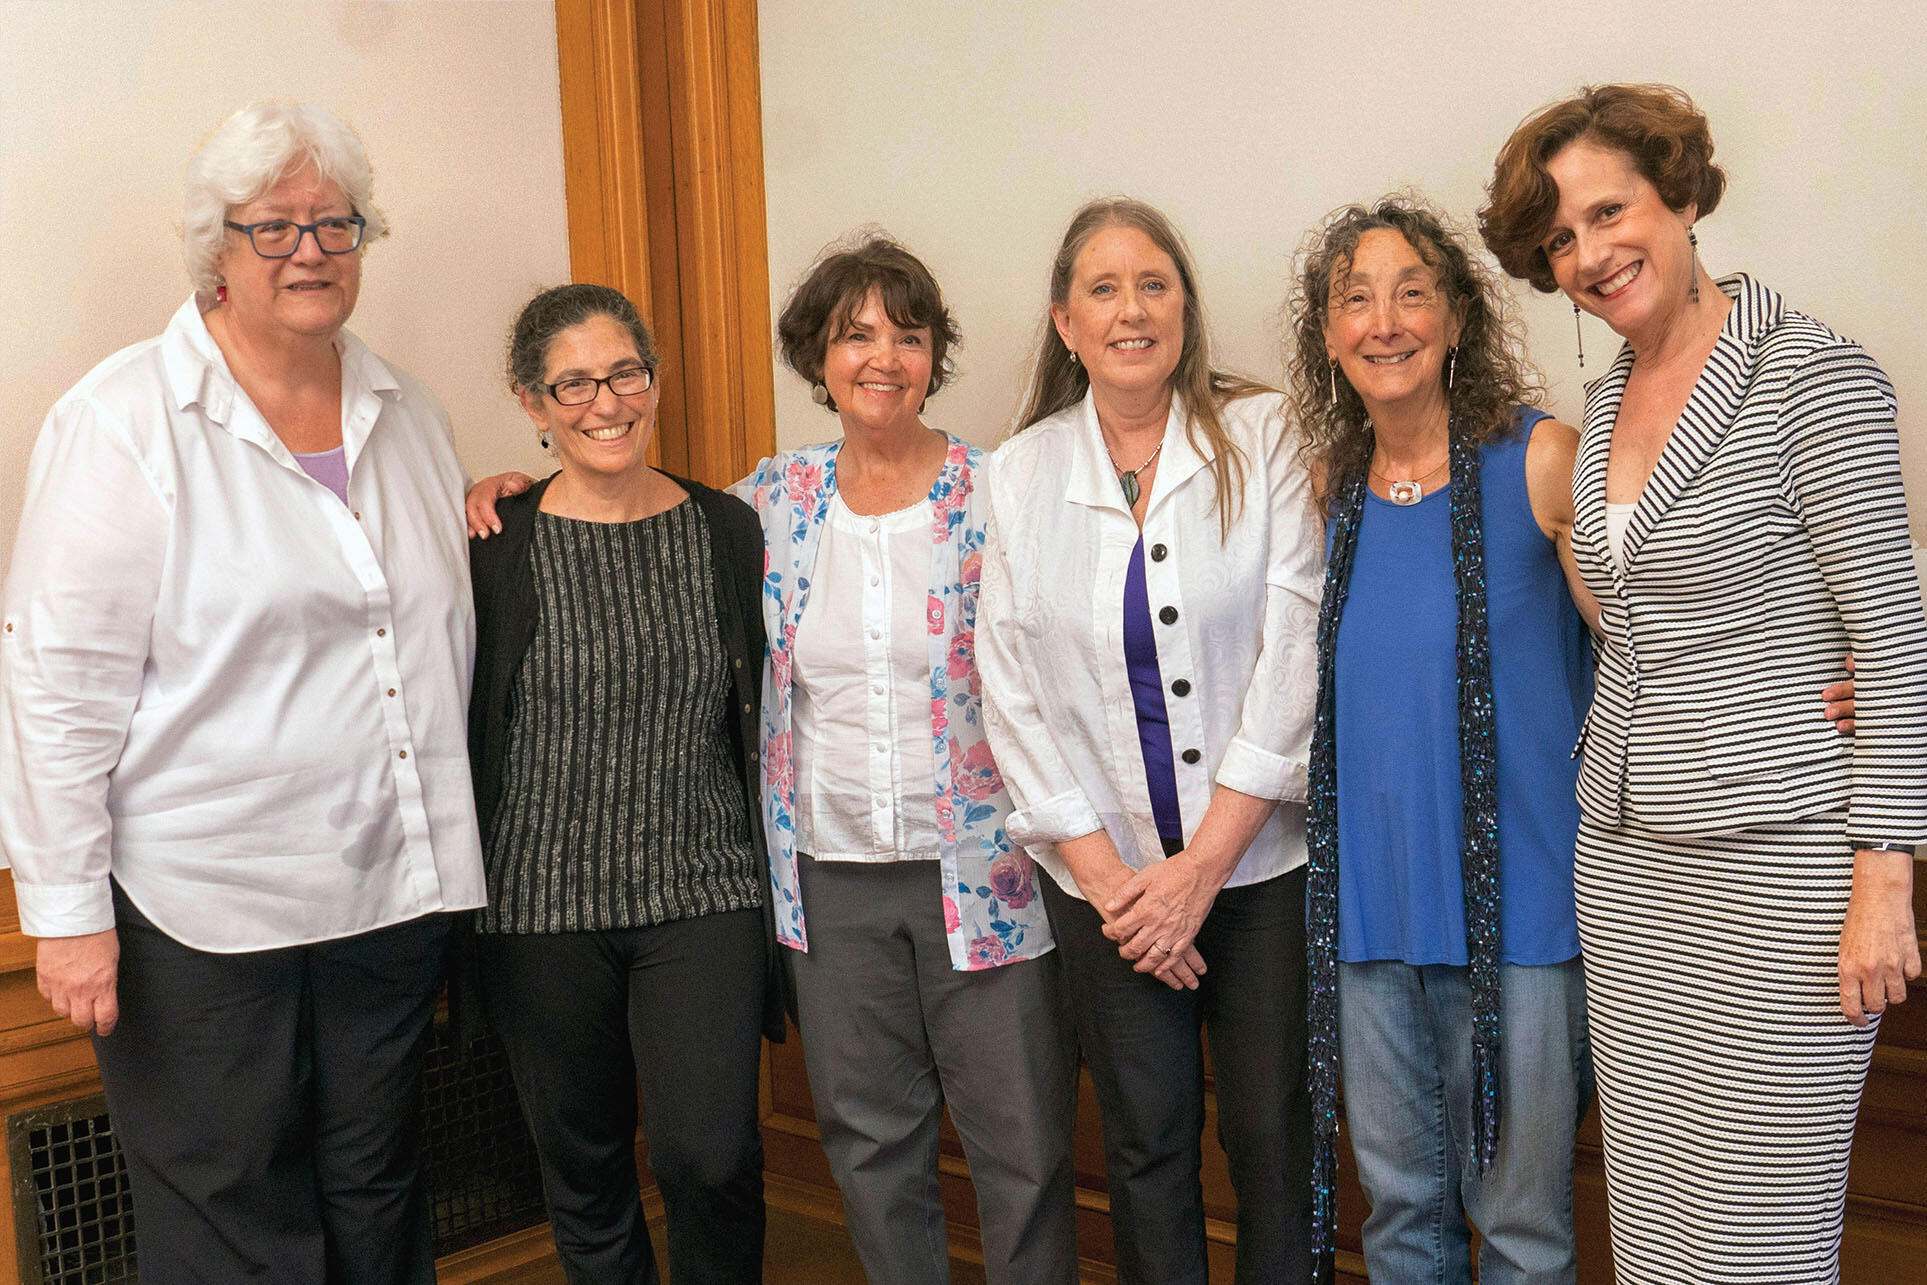  Rosemary Joyce, Paula Worby, Beatriz Manz, Elizabeth Oglesby, Karen Musalo, and Denise Dresser. (Photo by Jim Block.)